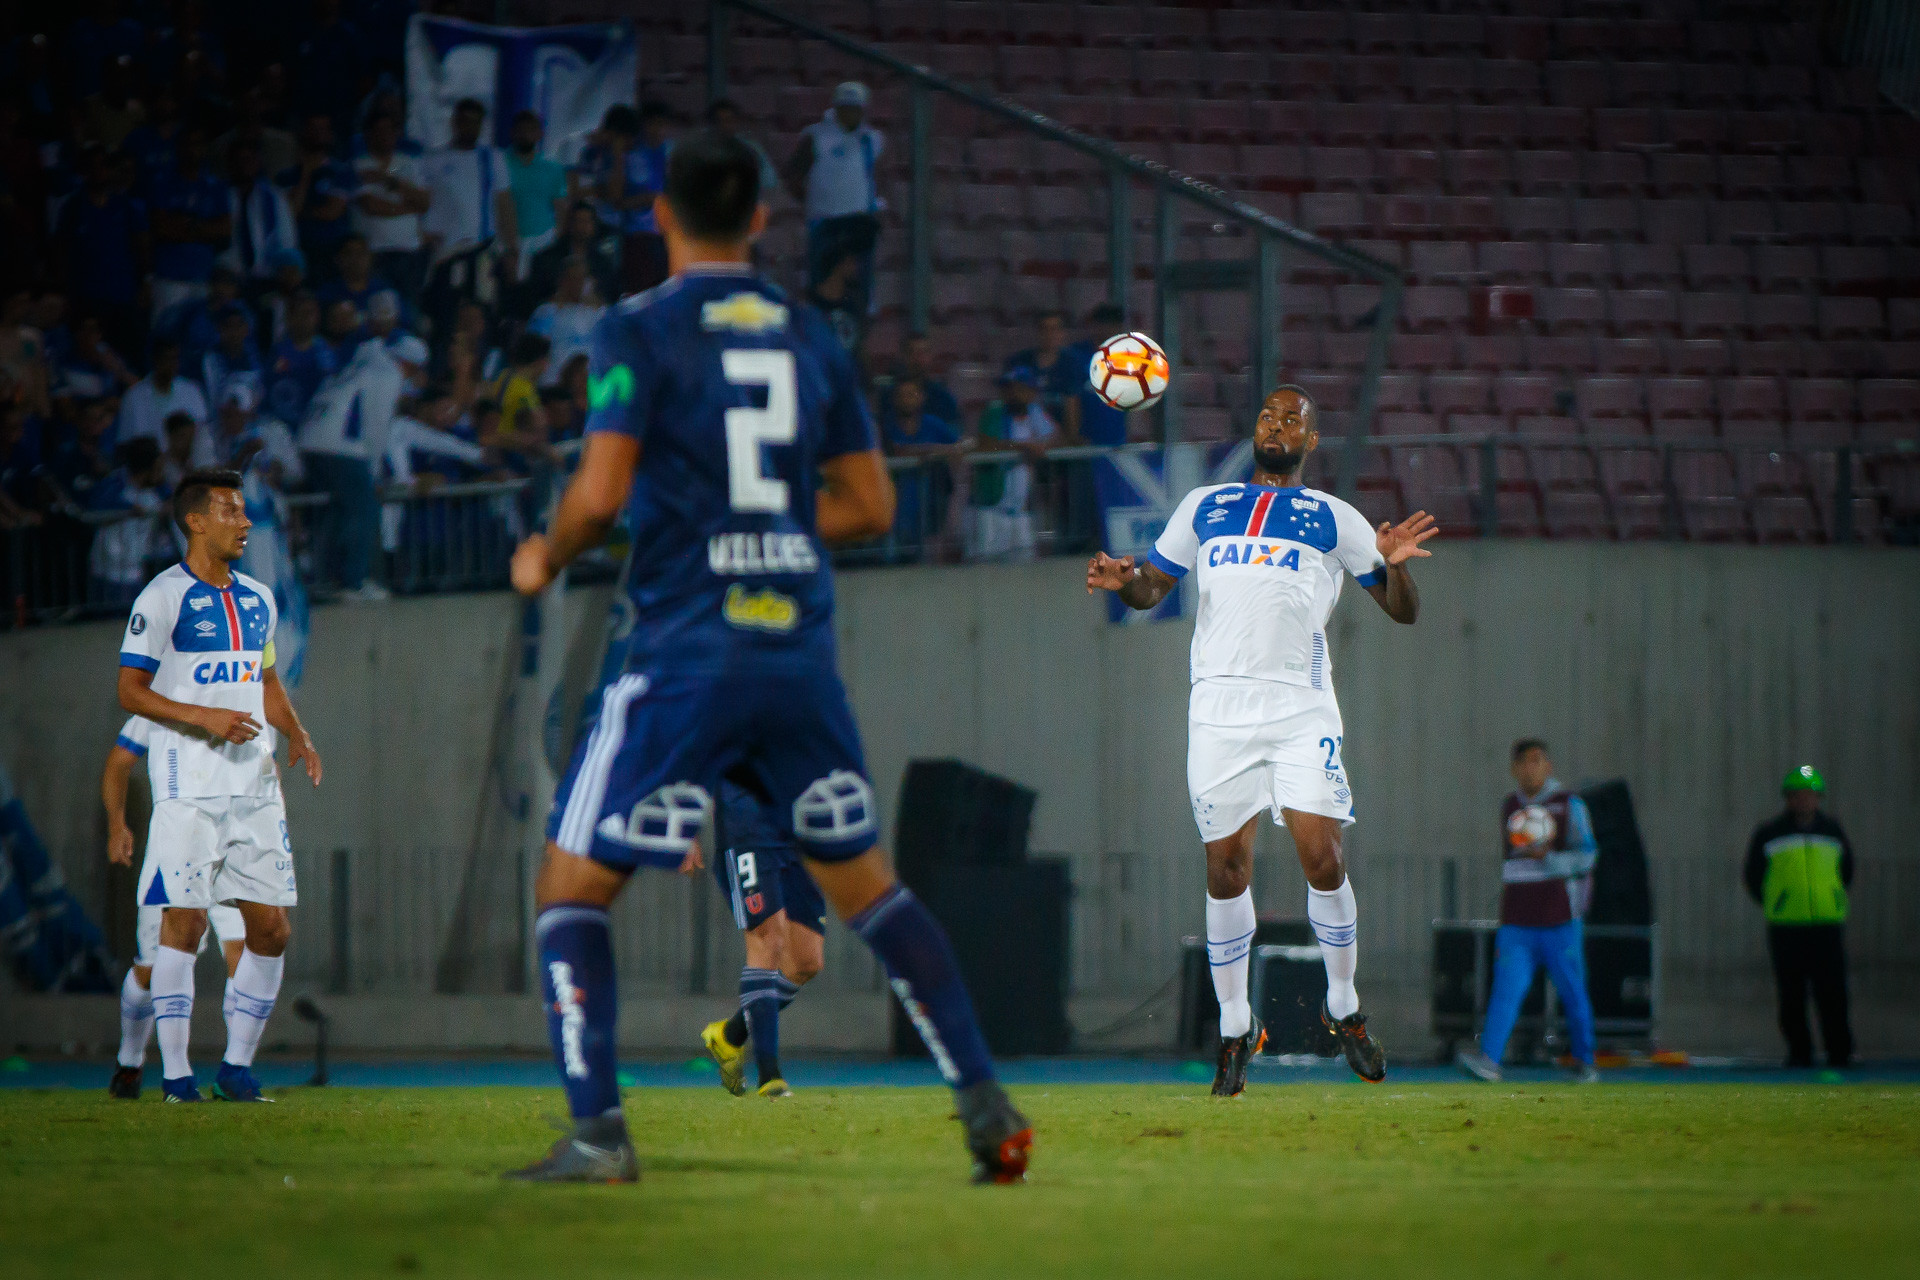 Foto: Vinnicius Silva/Cruzeiro E.C.

